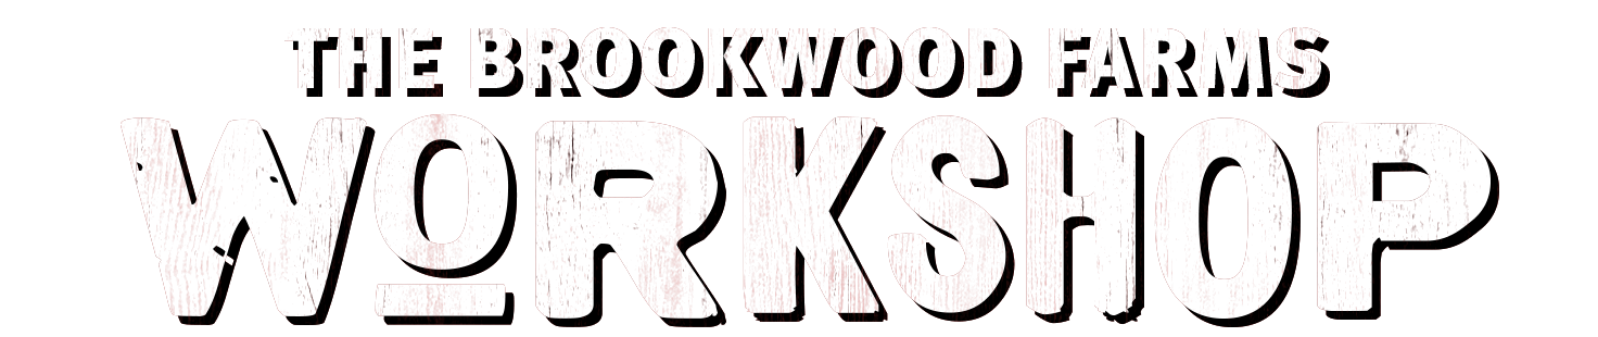 Brookwood Farms Workshop